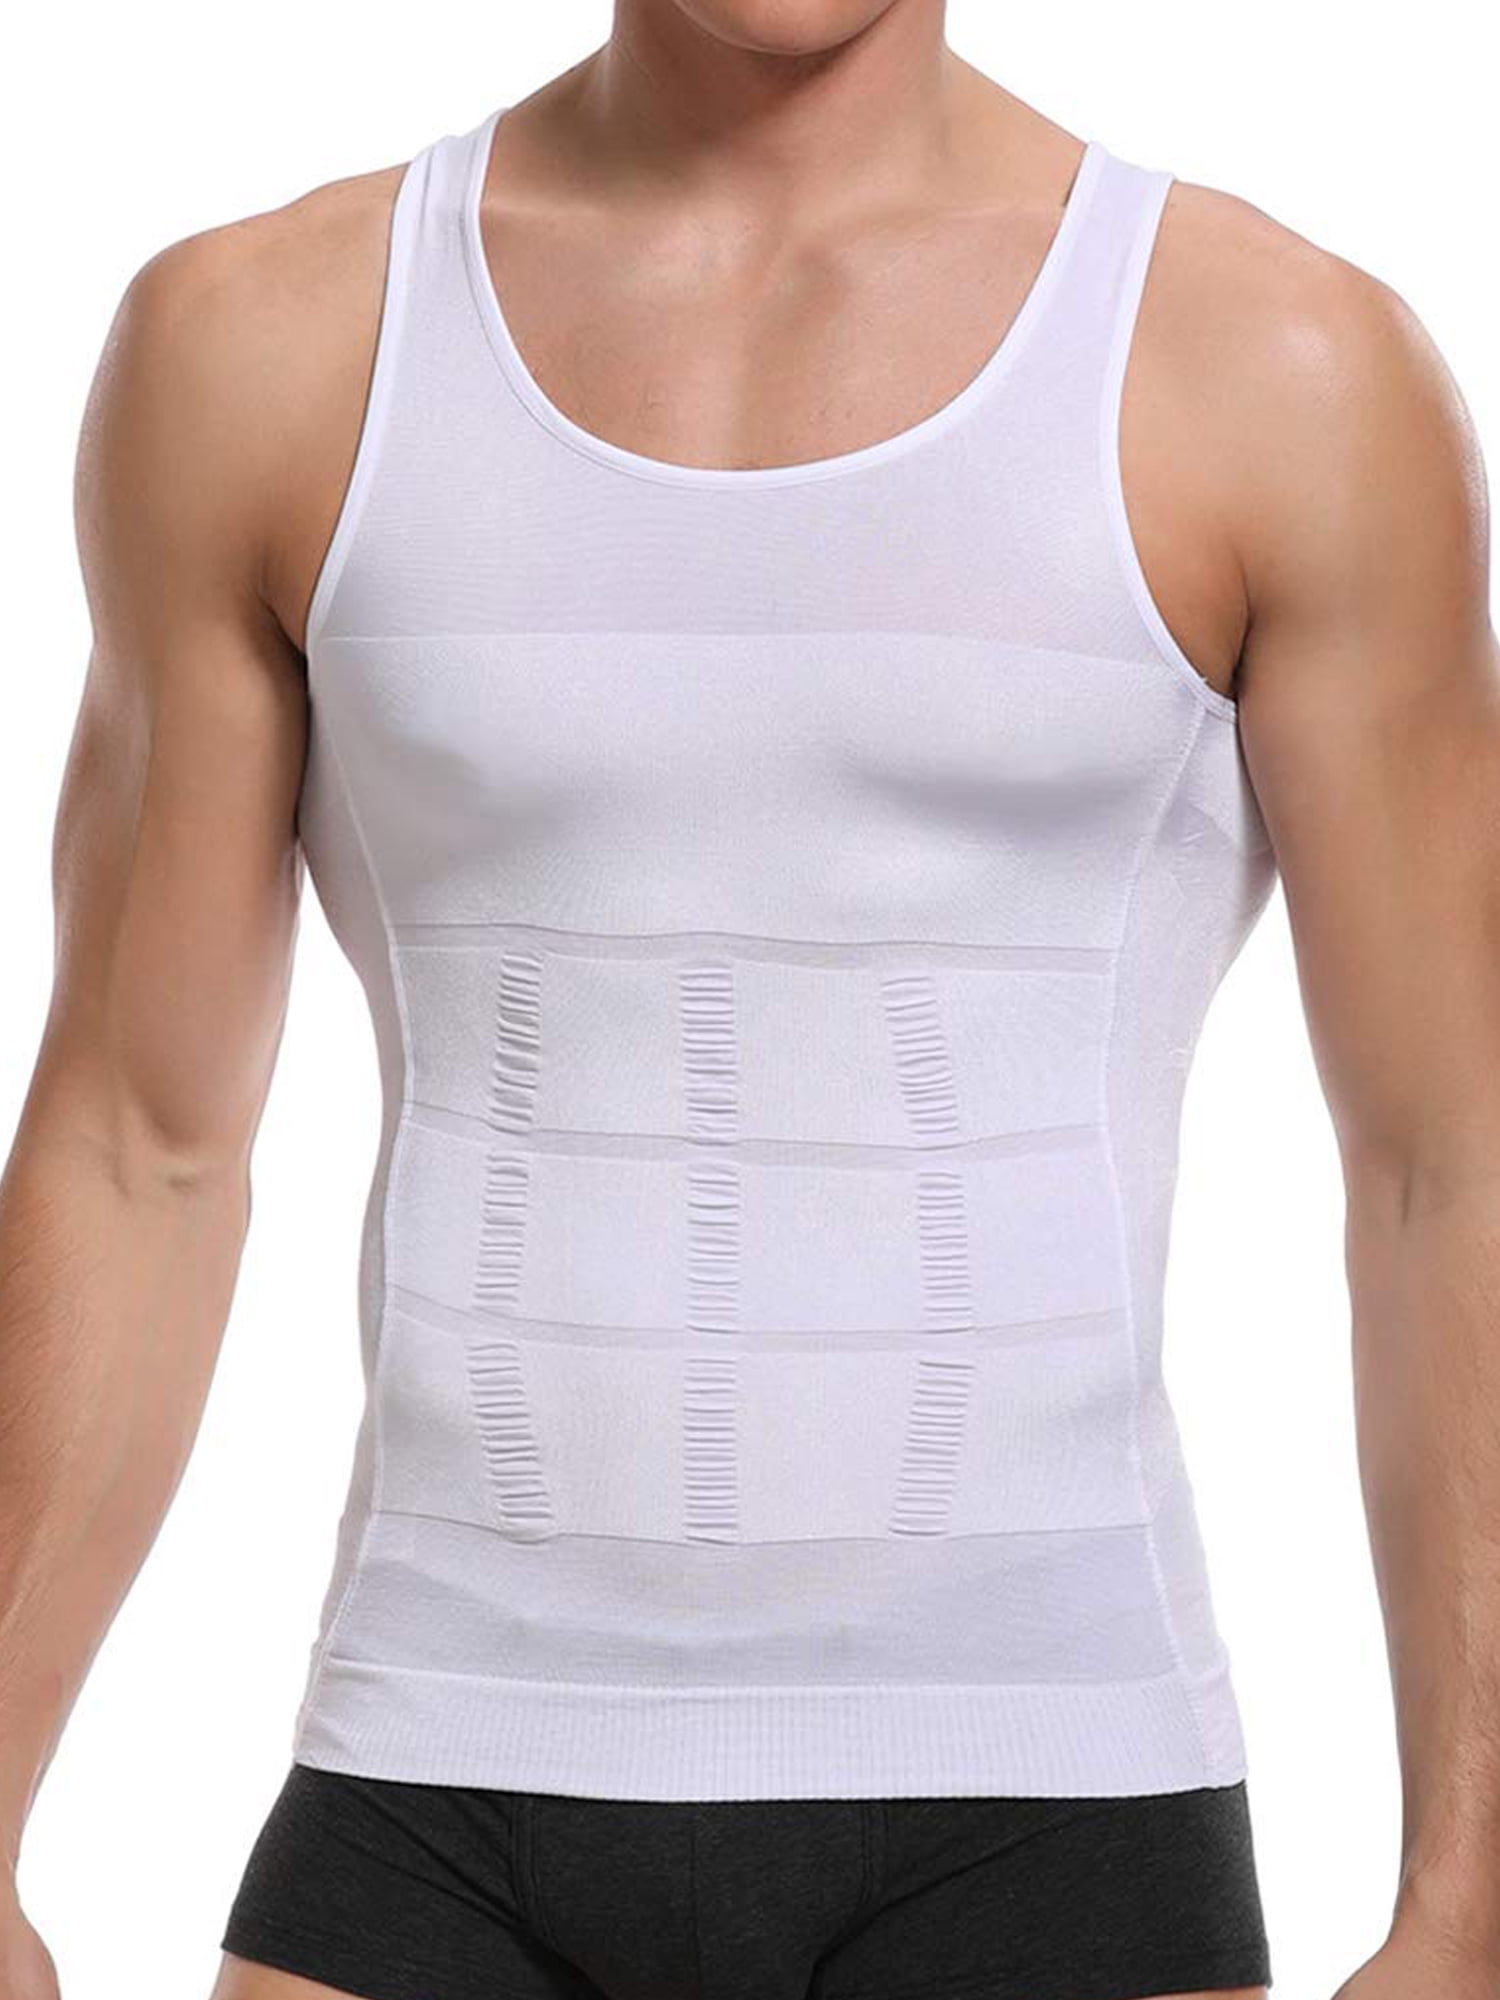 Mens Compression Undershirt Slimming Body Shaper Tummy Control Vest Elastic Gynecomastia Shirt 